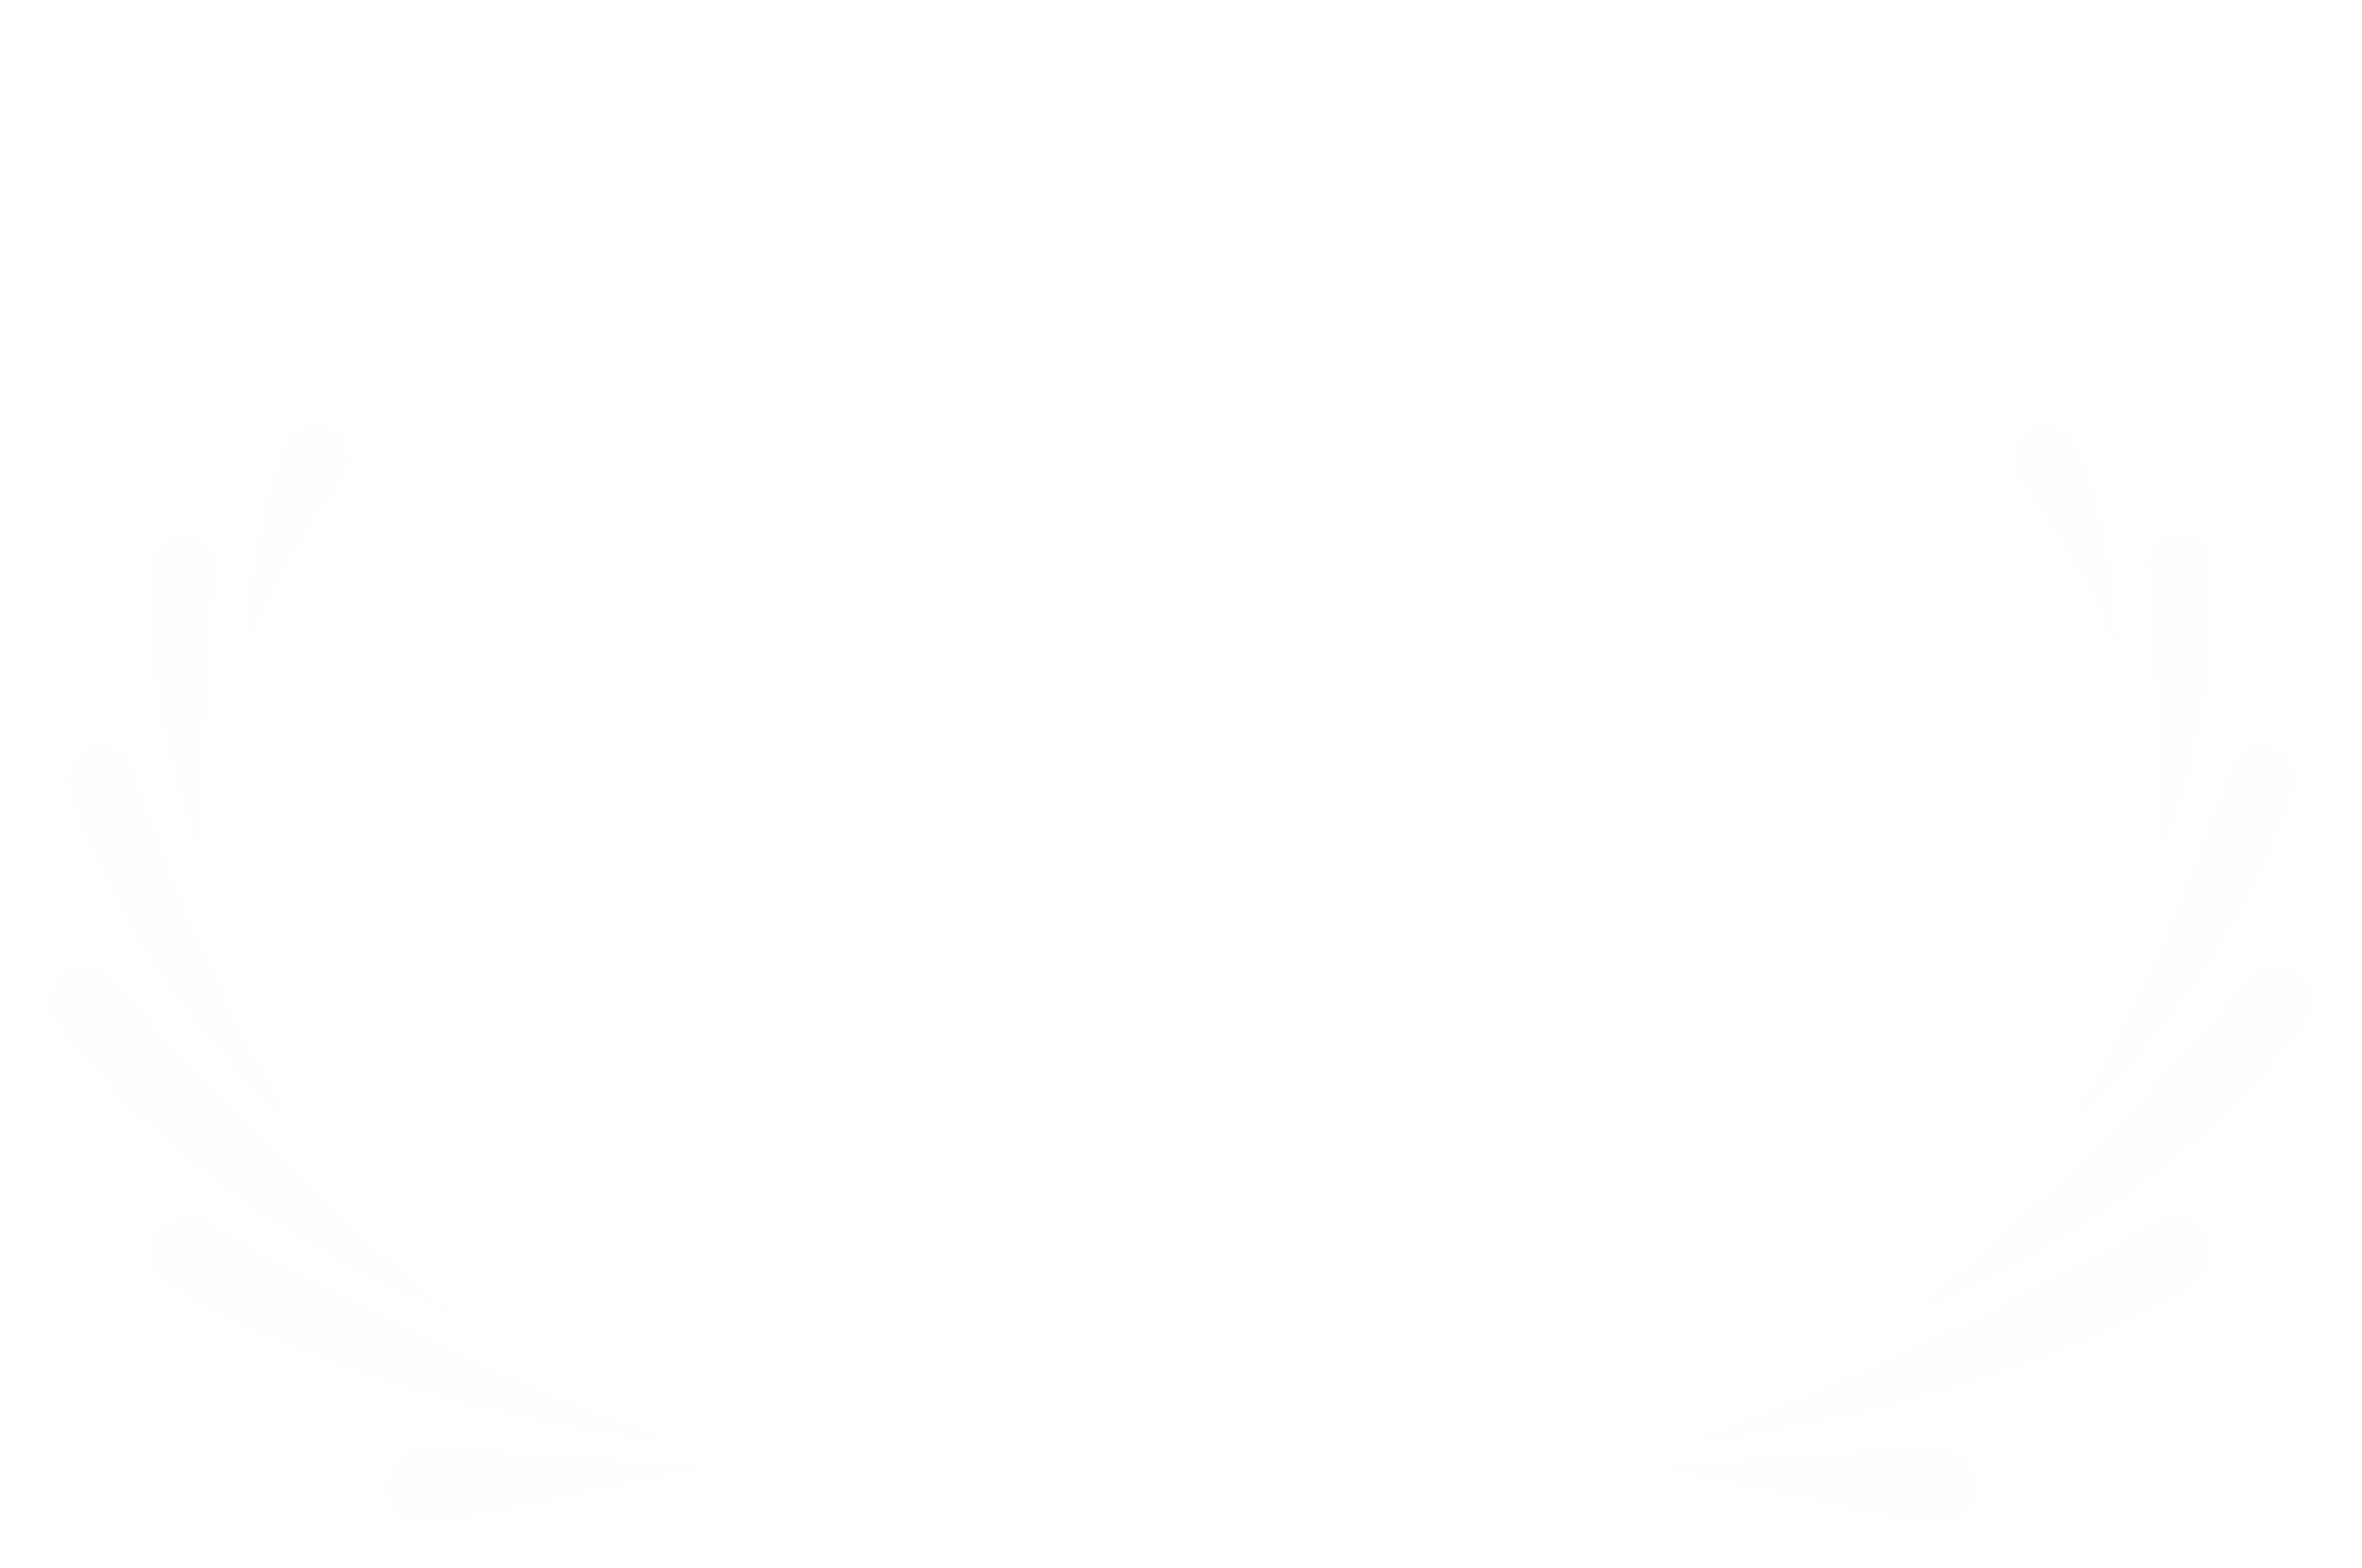 Script - Winner Future of Film Awards 2022